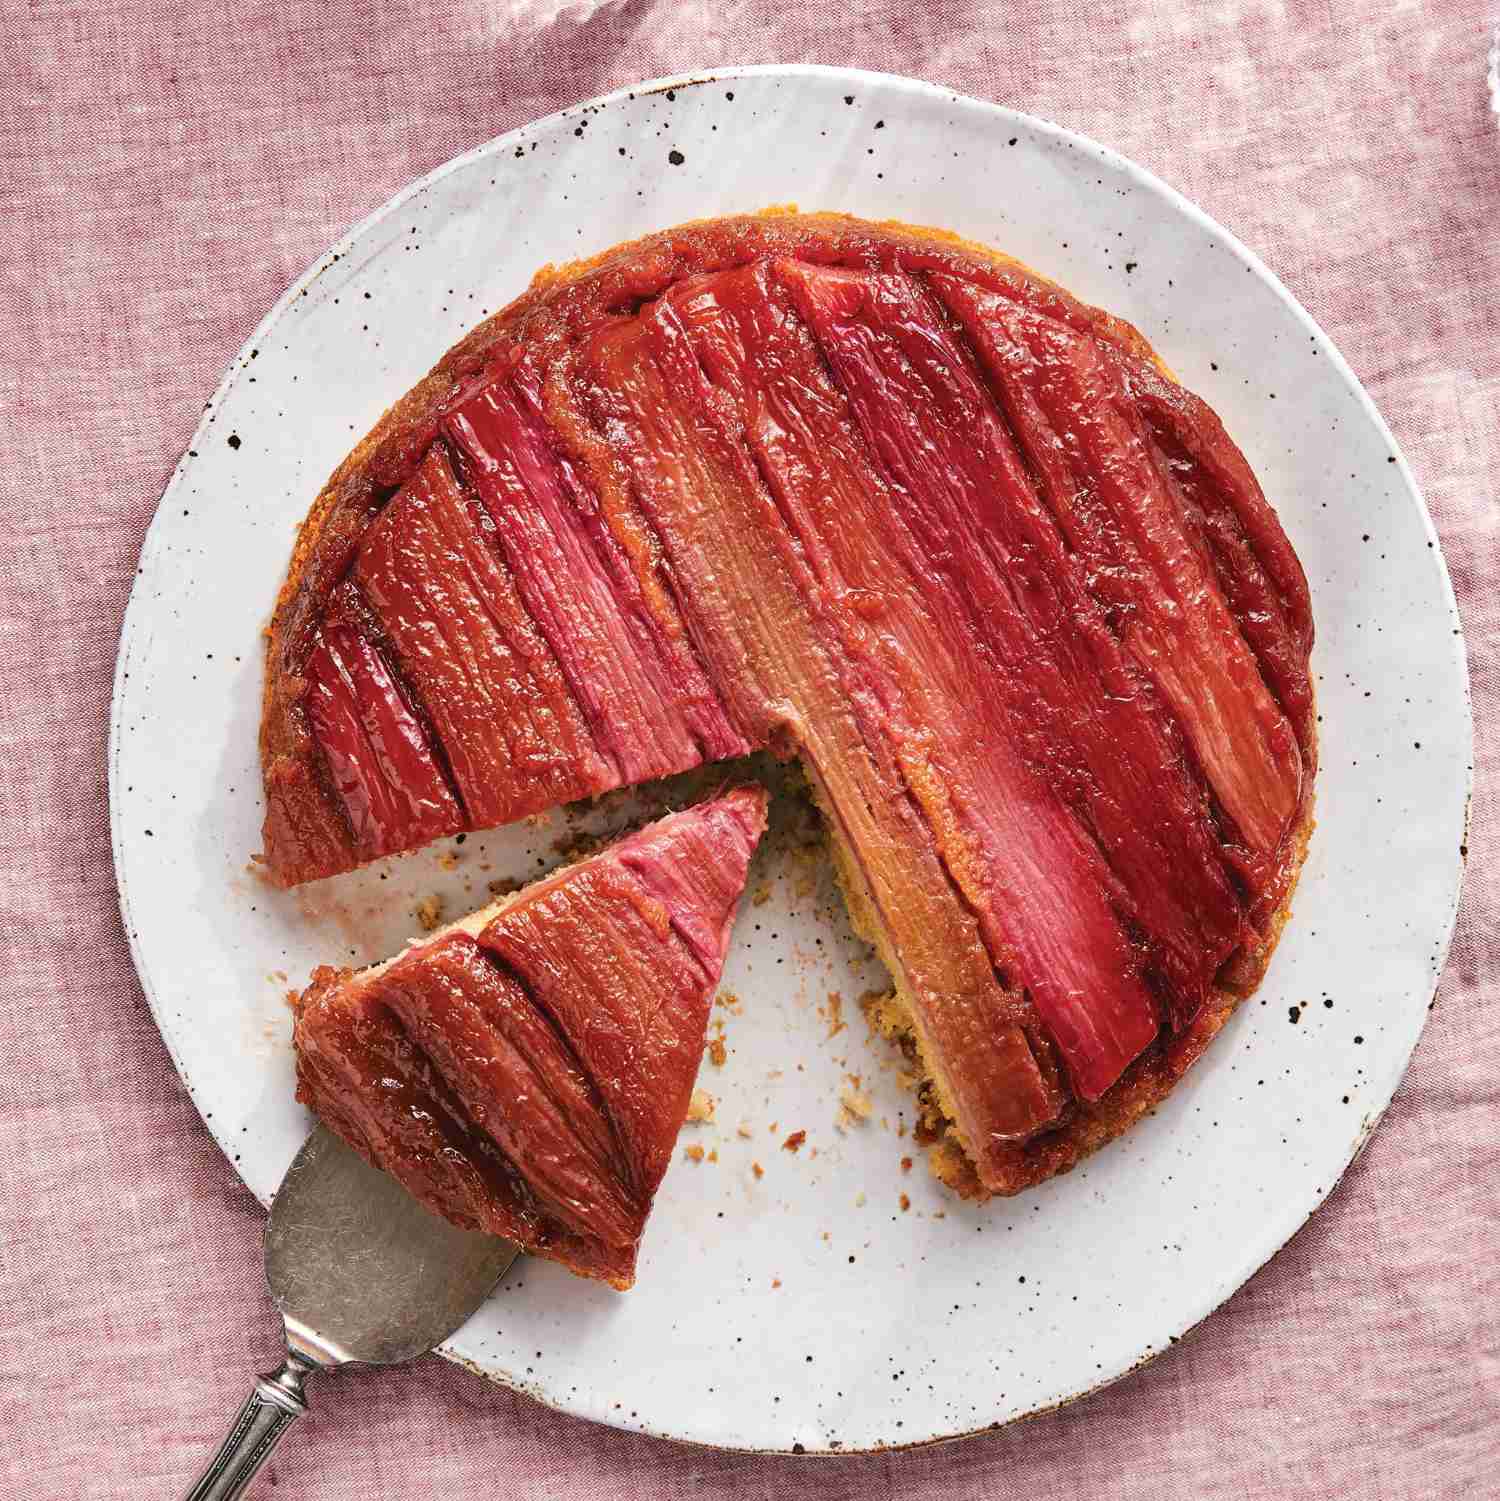 easter baking recipes, rhubarb upside down cake